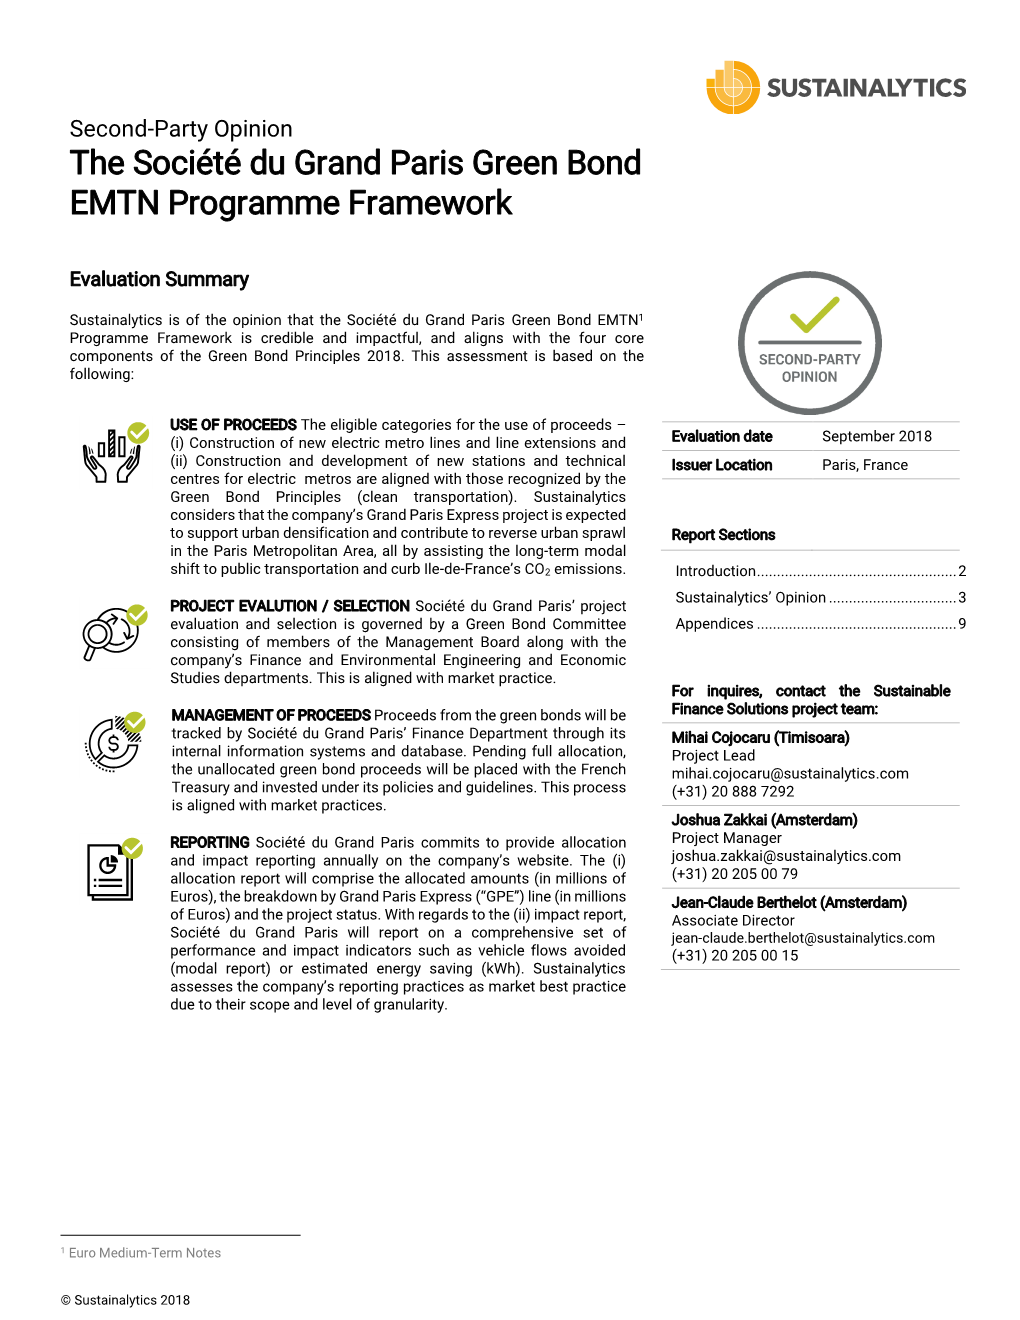 The Société Du Grand Paris Green Bond EMTN Programme Framework